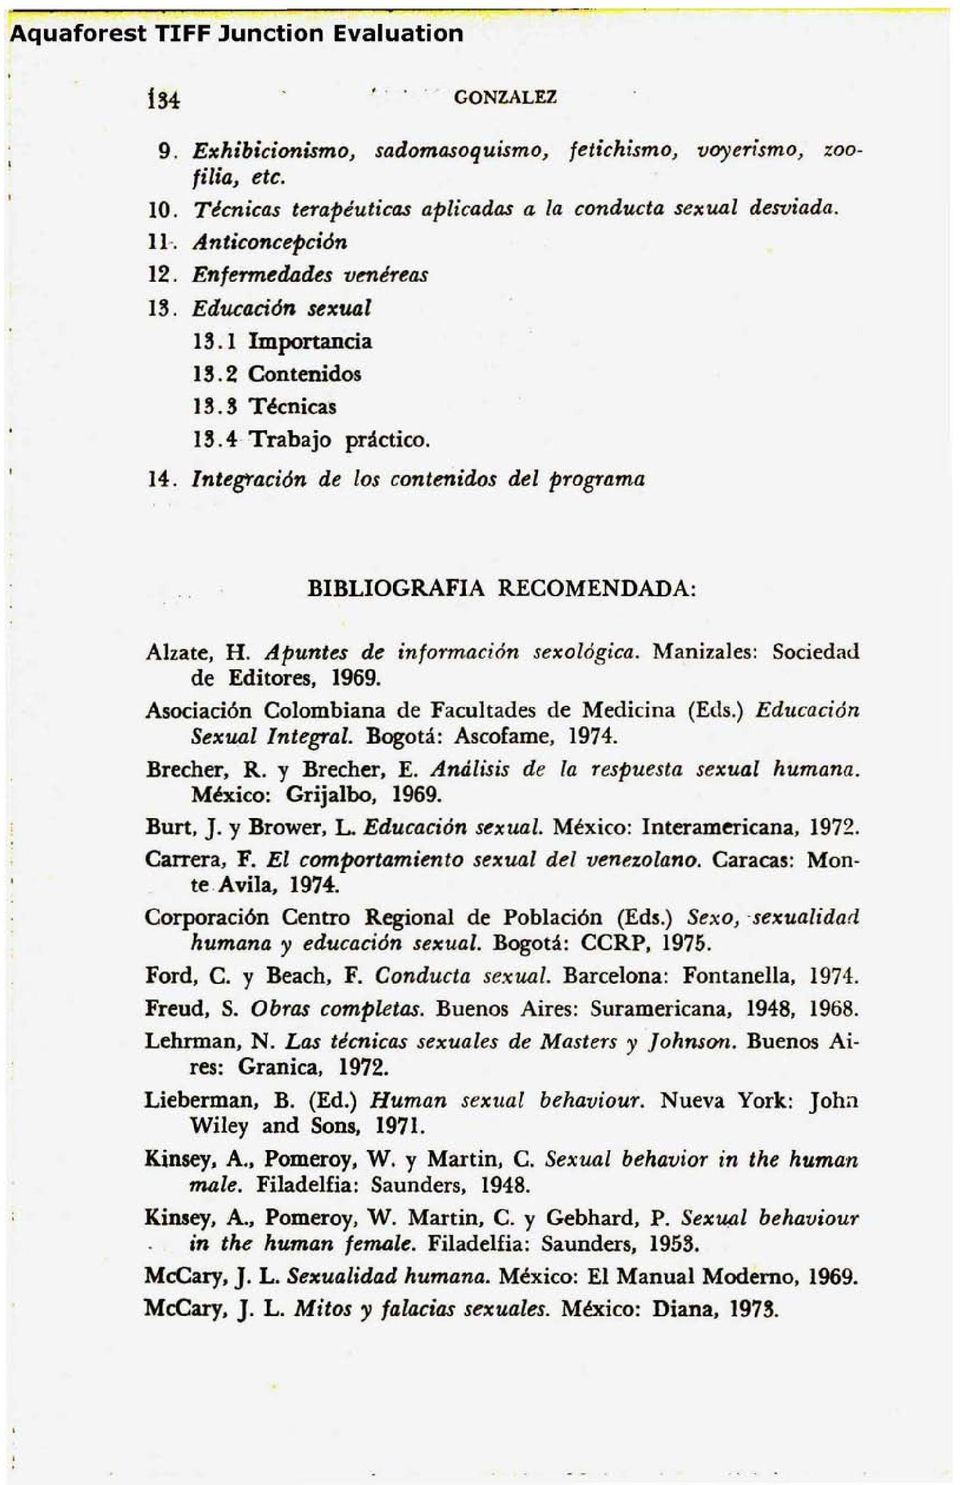 Apuntes de información sexolágica. Manizales: Sociedad de Editores. 1969. Asociación Colombiana de Facultades de Medicina (Eds.) Educación Sexual Integral. Bogotá: Ascofame, 1974. Brecher, R.